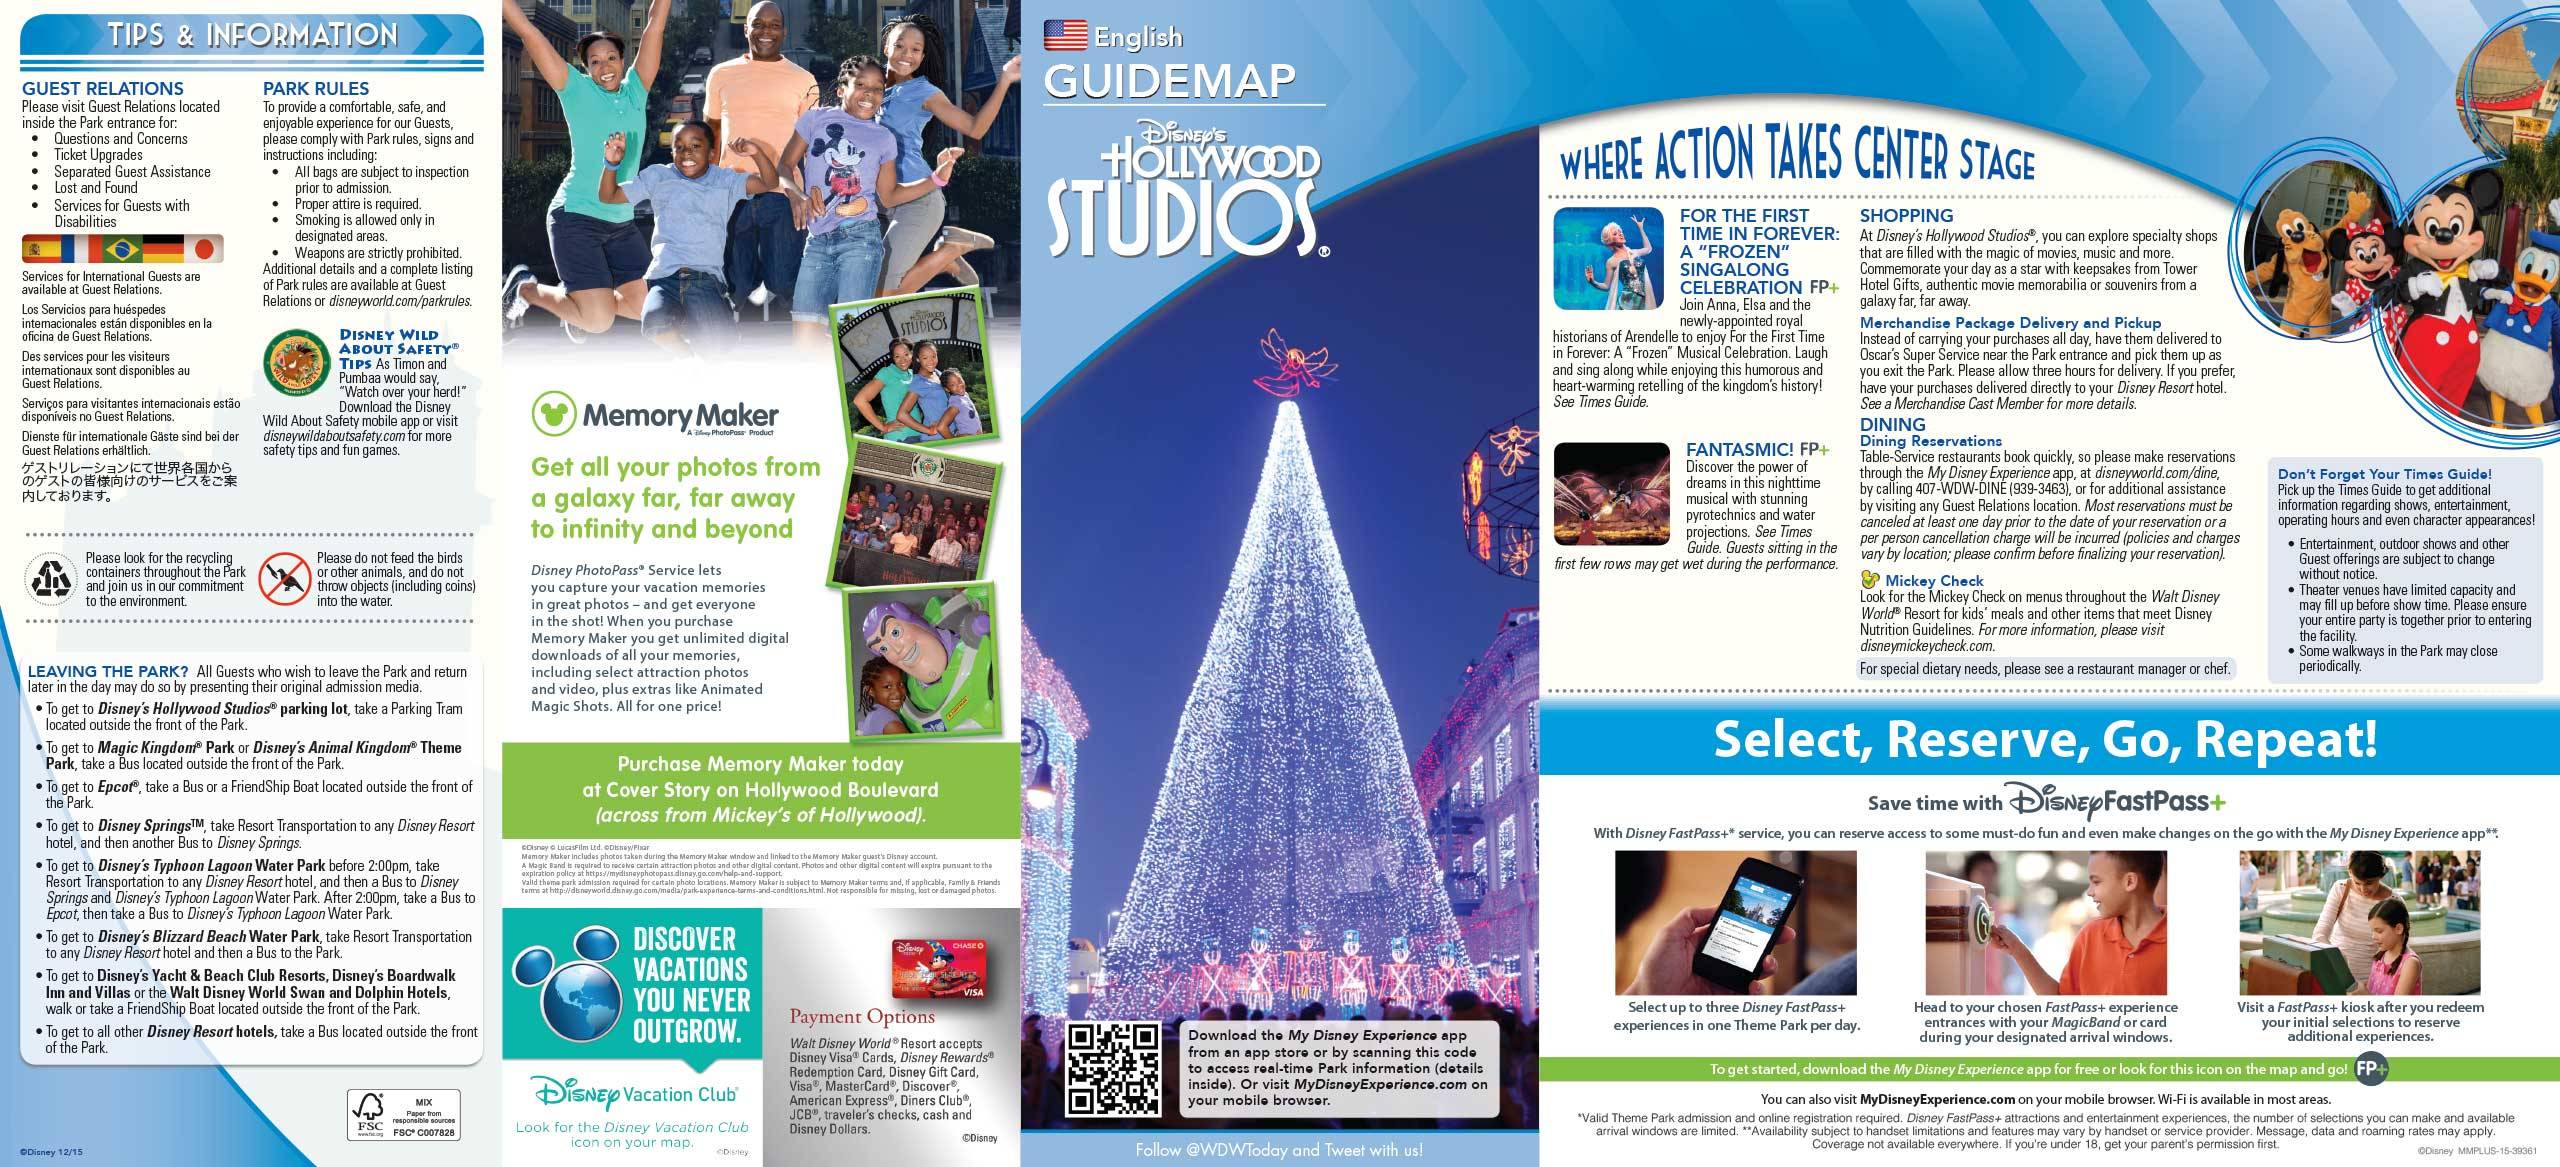 Disney's Hollywood Studios Guide Map December 2015